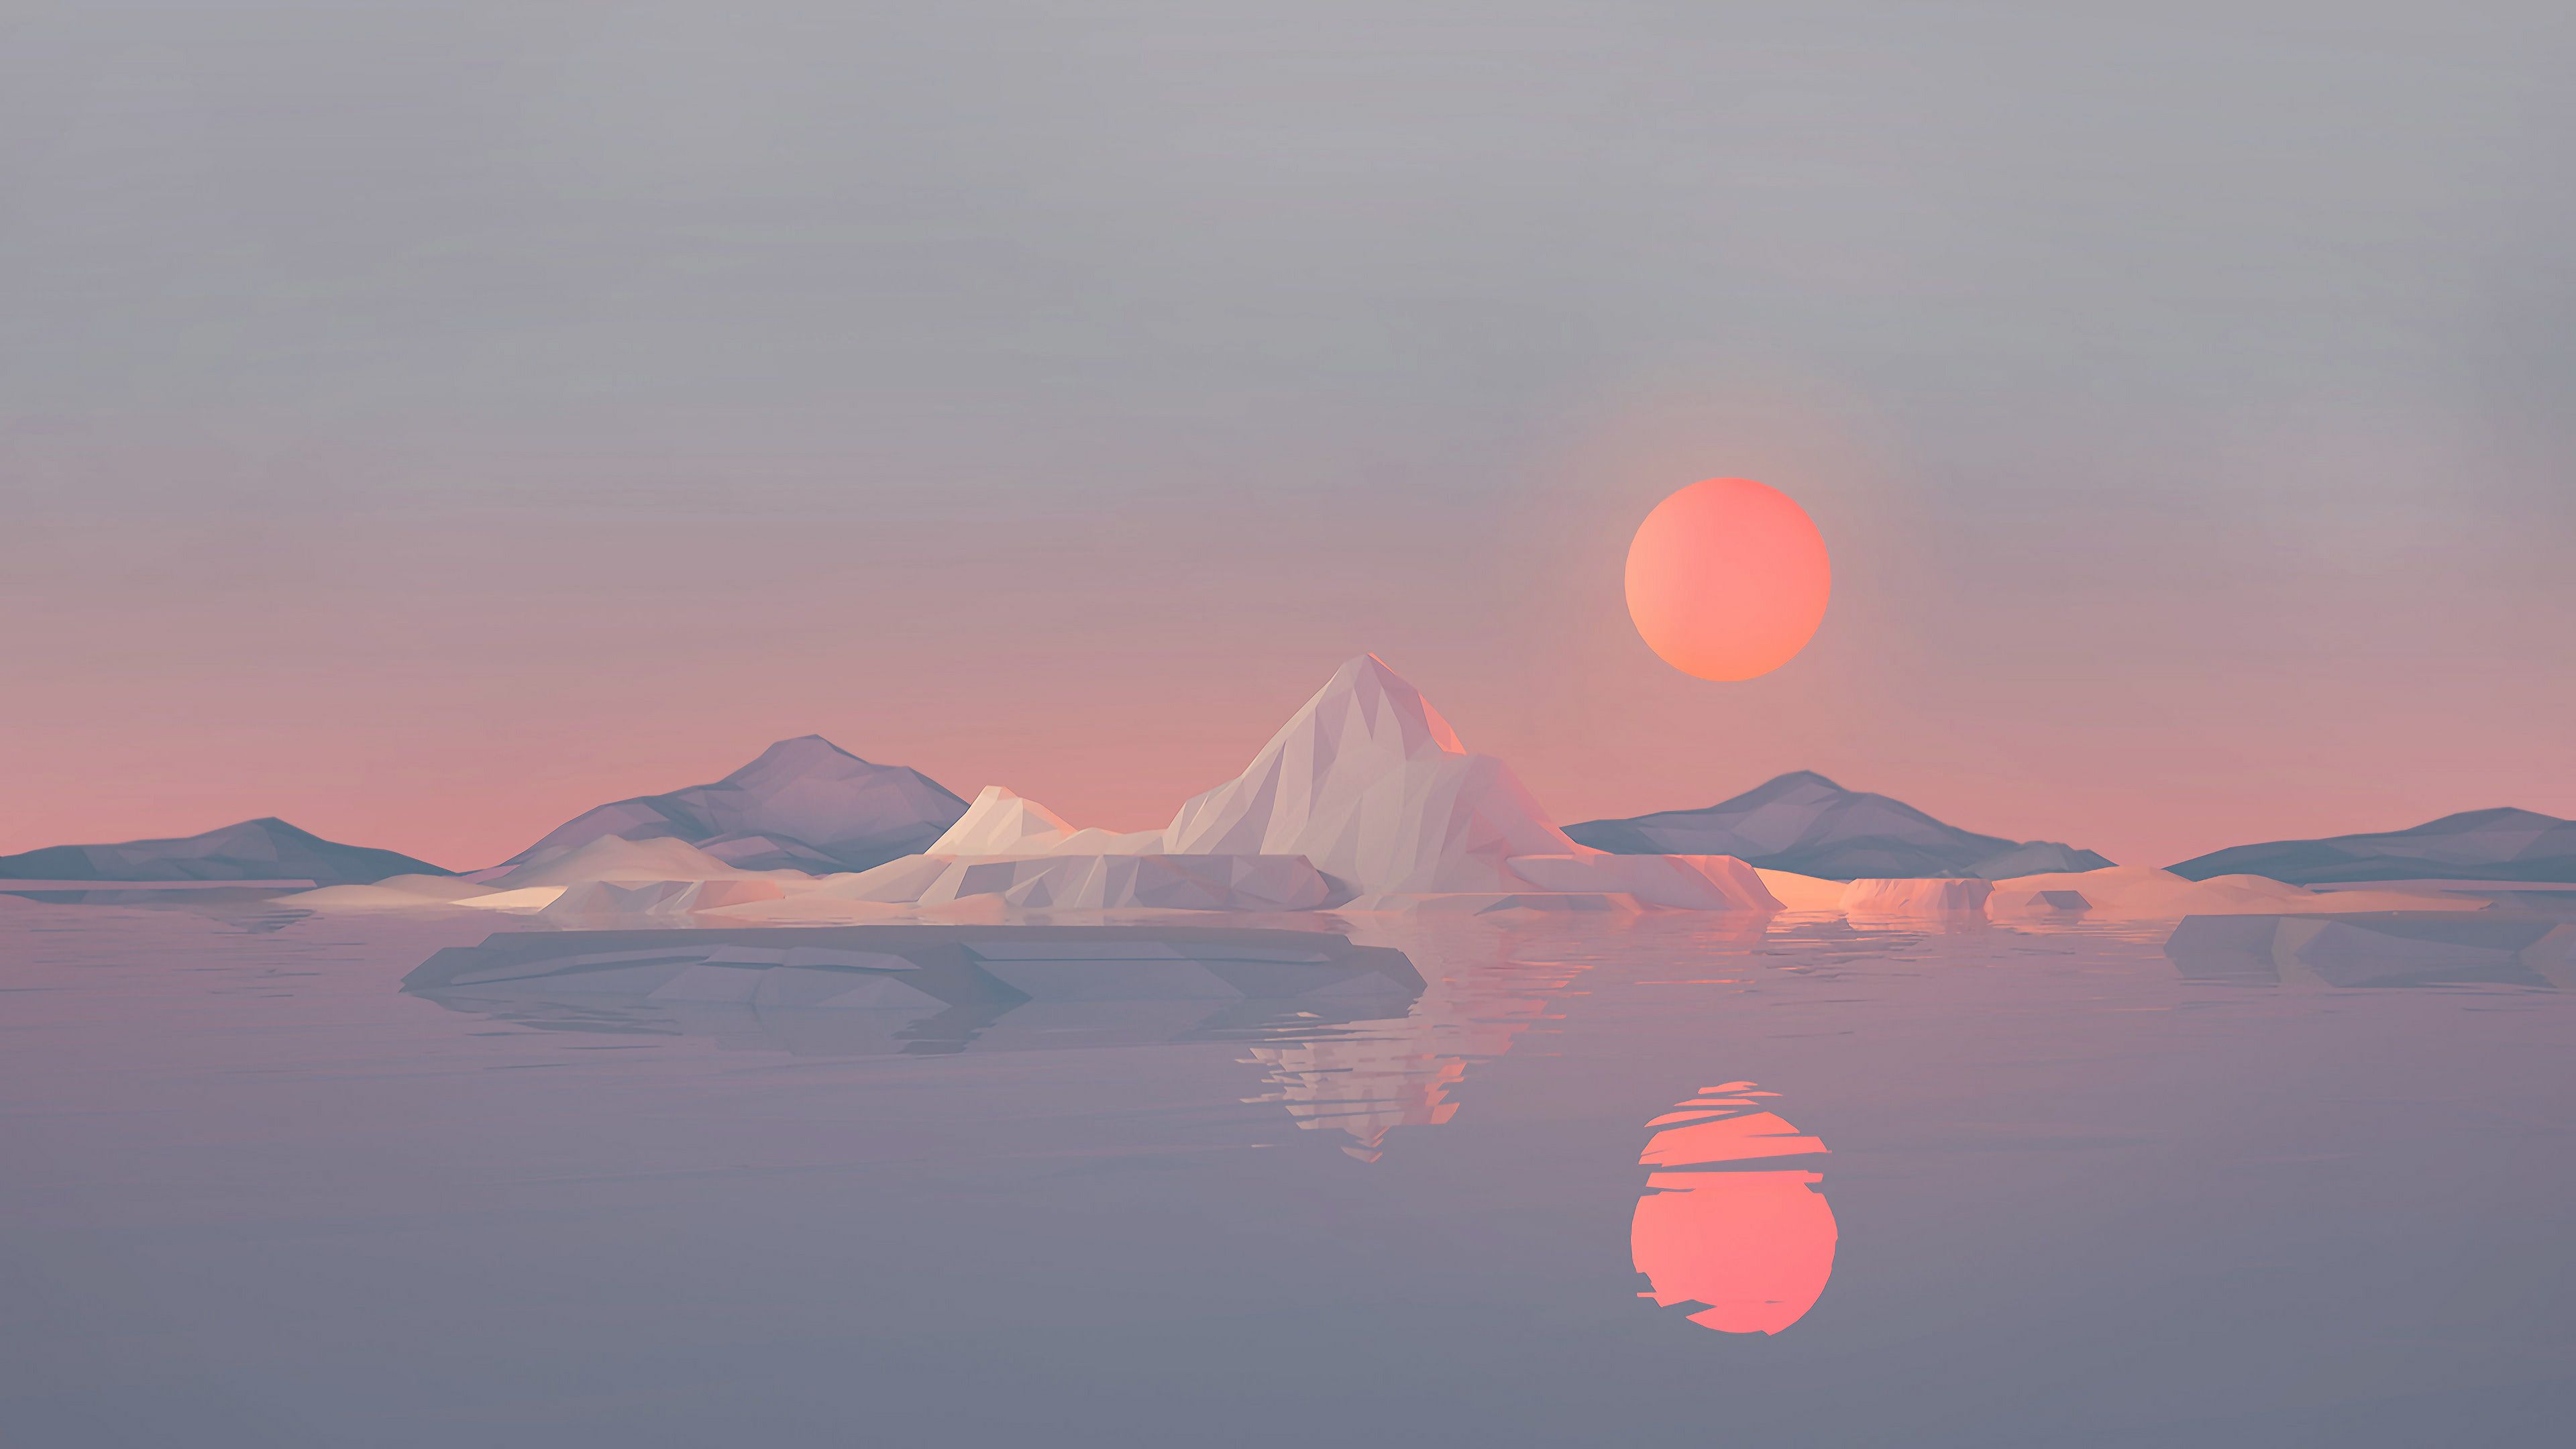 Iceberg Minimalist 4k Macbook Pro Retina HD 4k Wallpaper, Image, Background, Photo and Picture